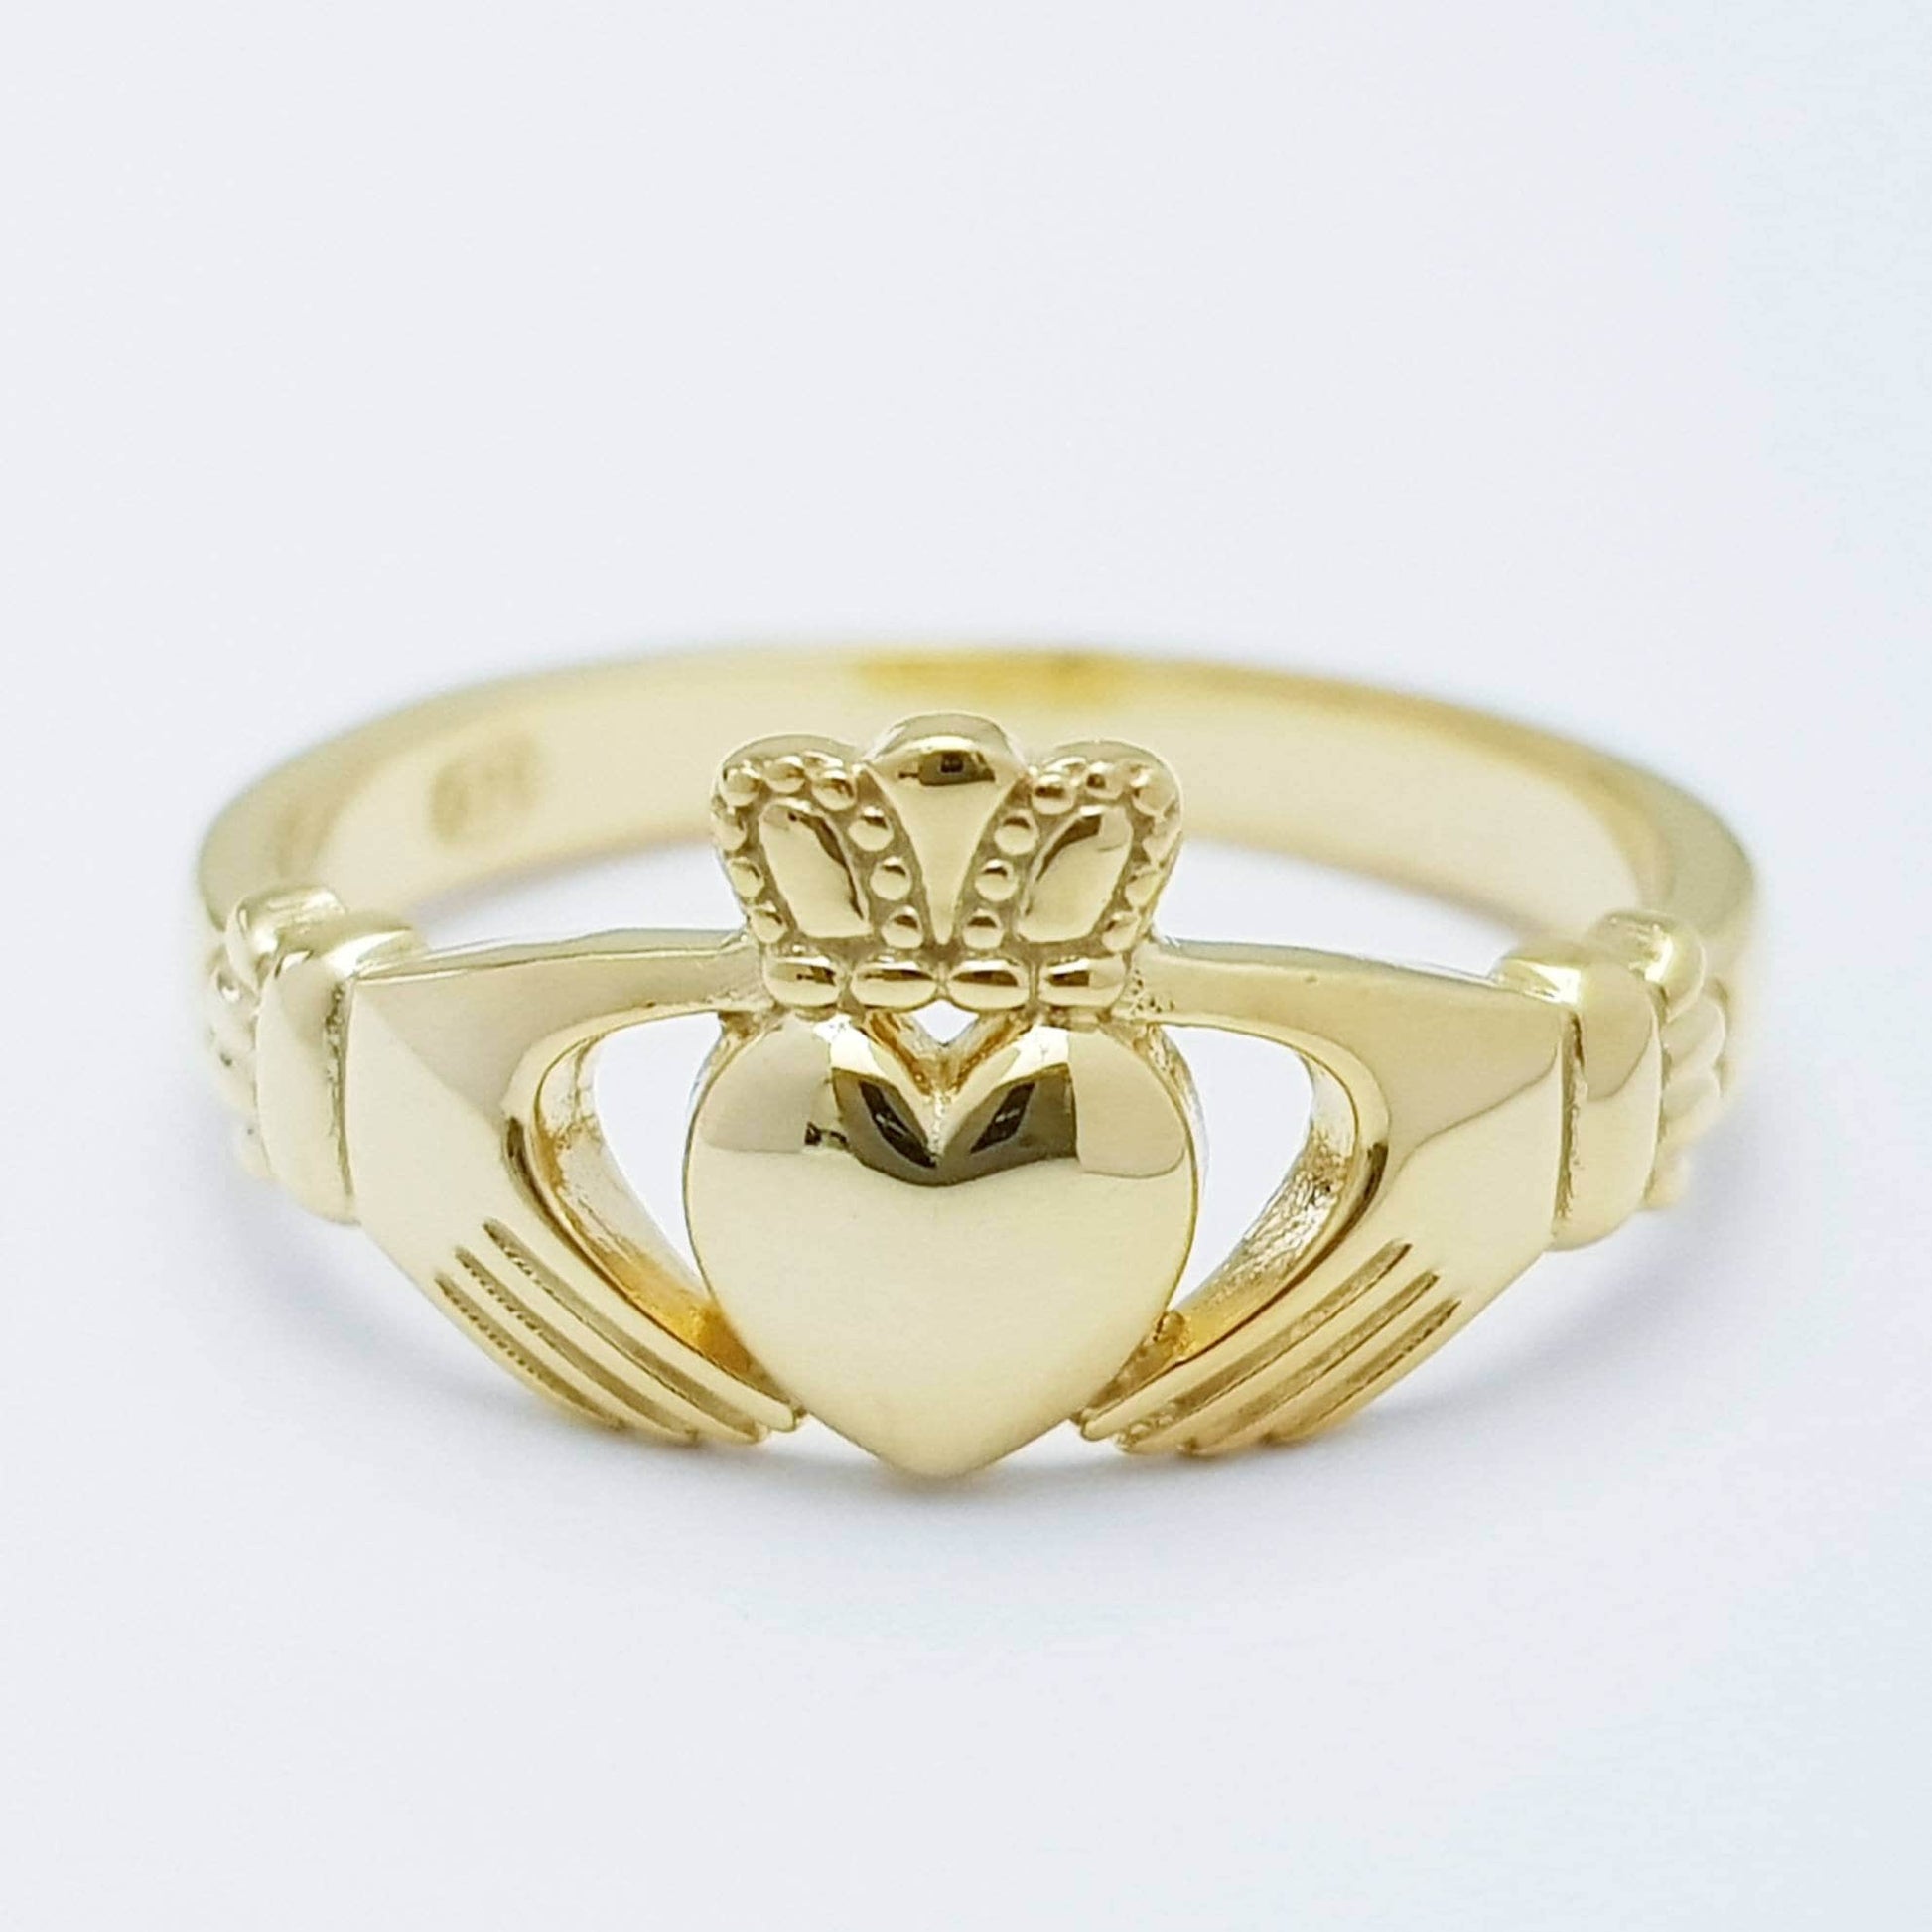 Dainty silver claddagh ring, Irish gold plated claddagh ring from Galway Ireland